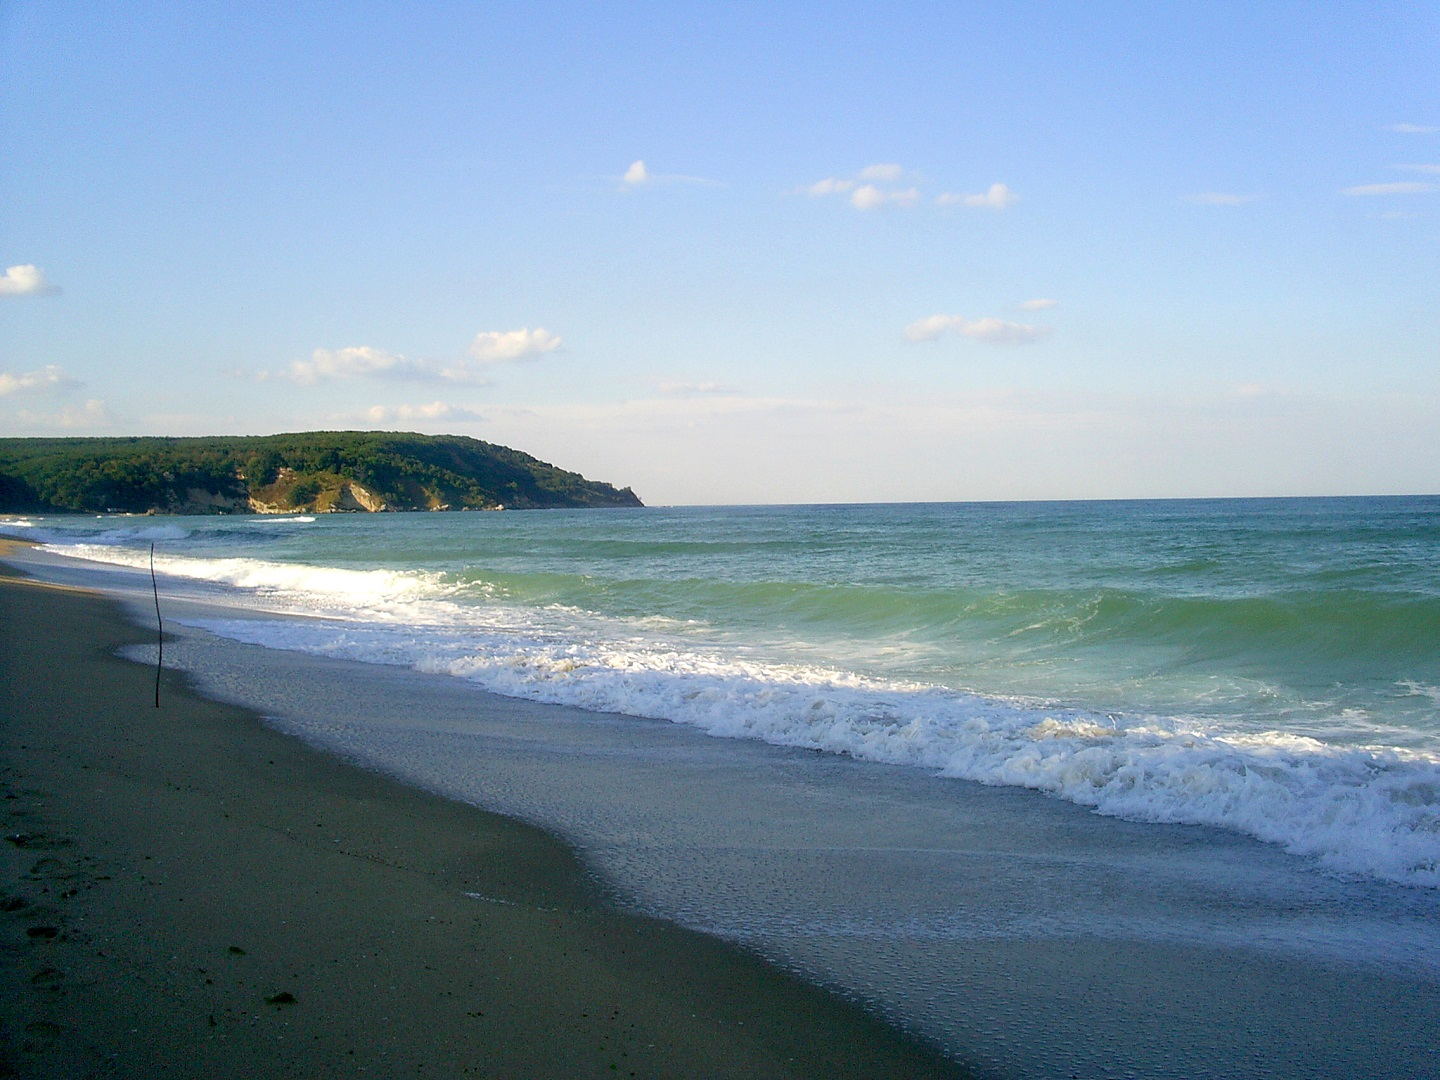 Kara Dere beach